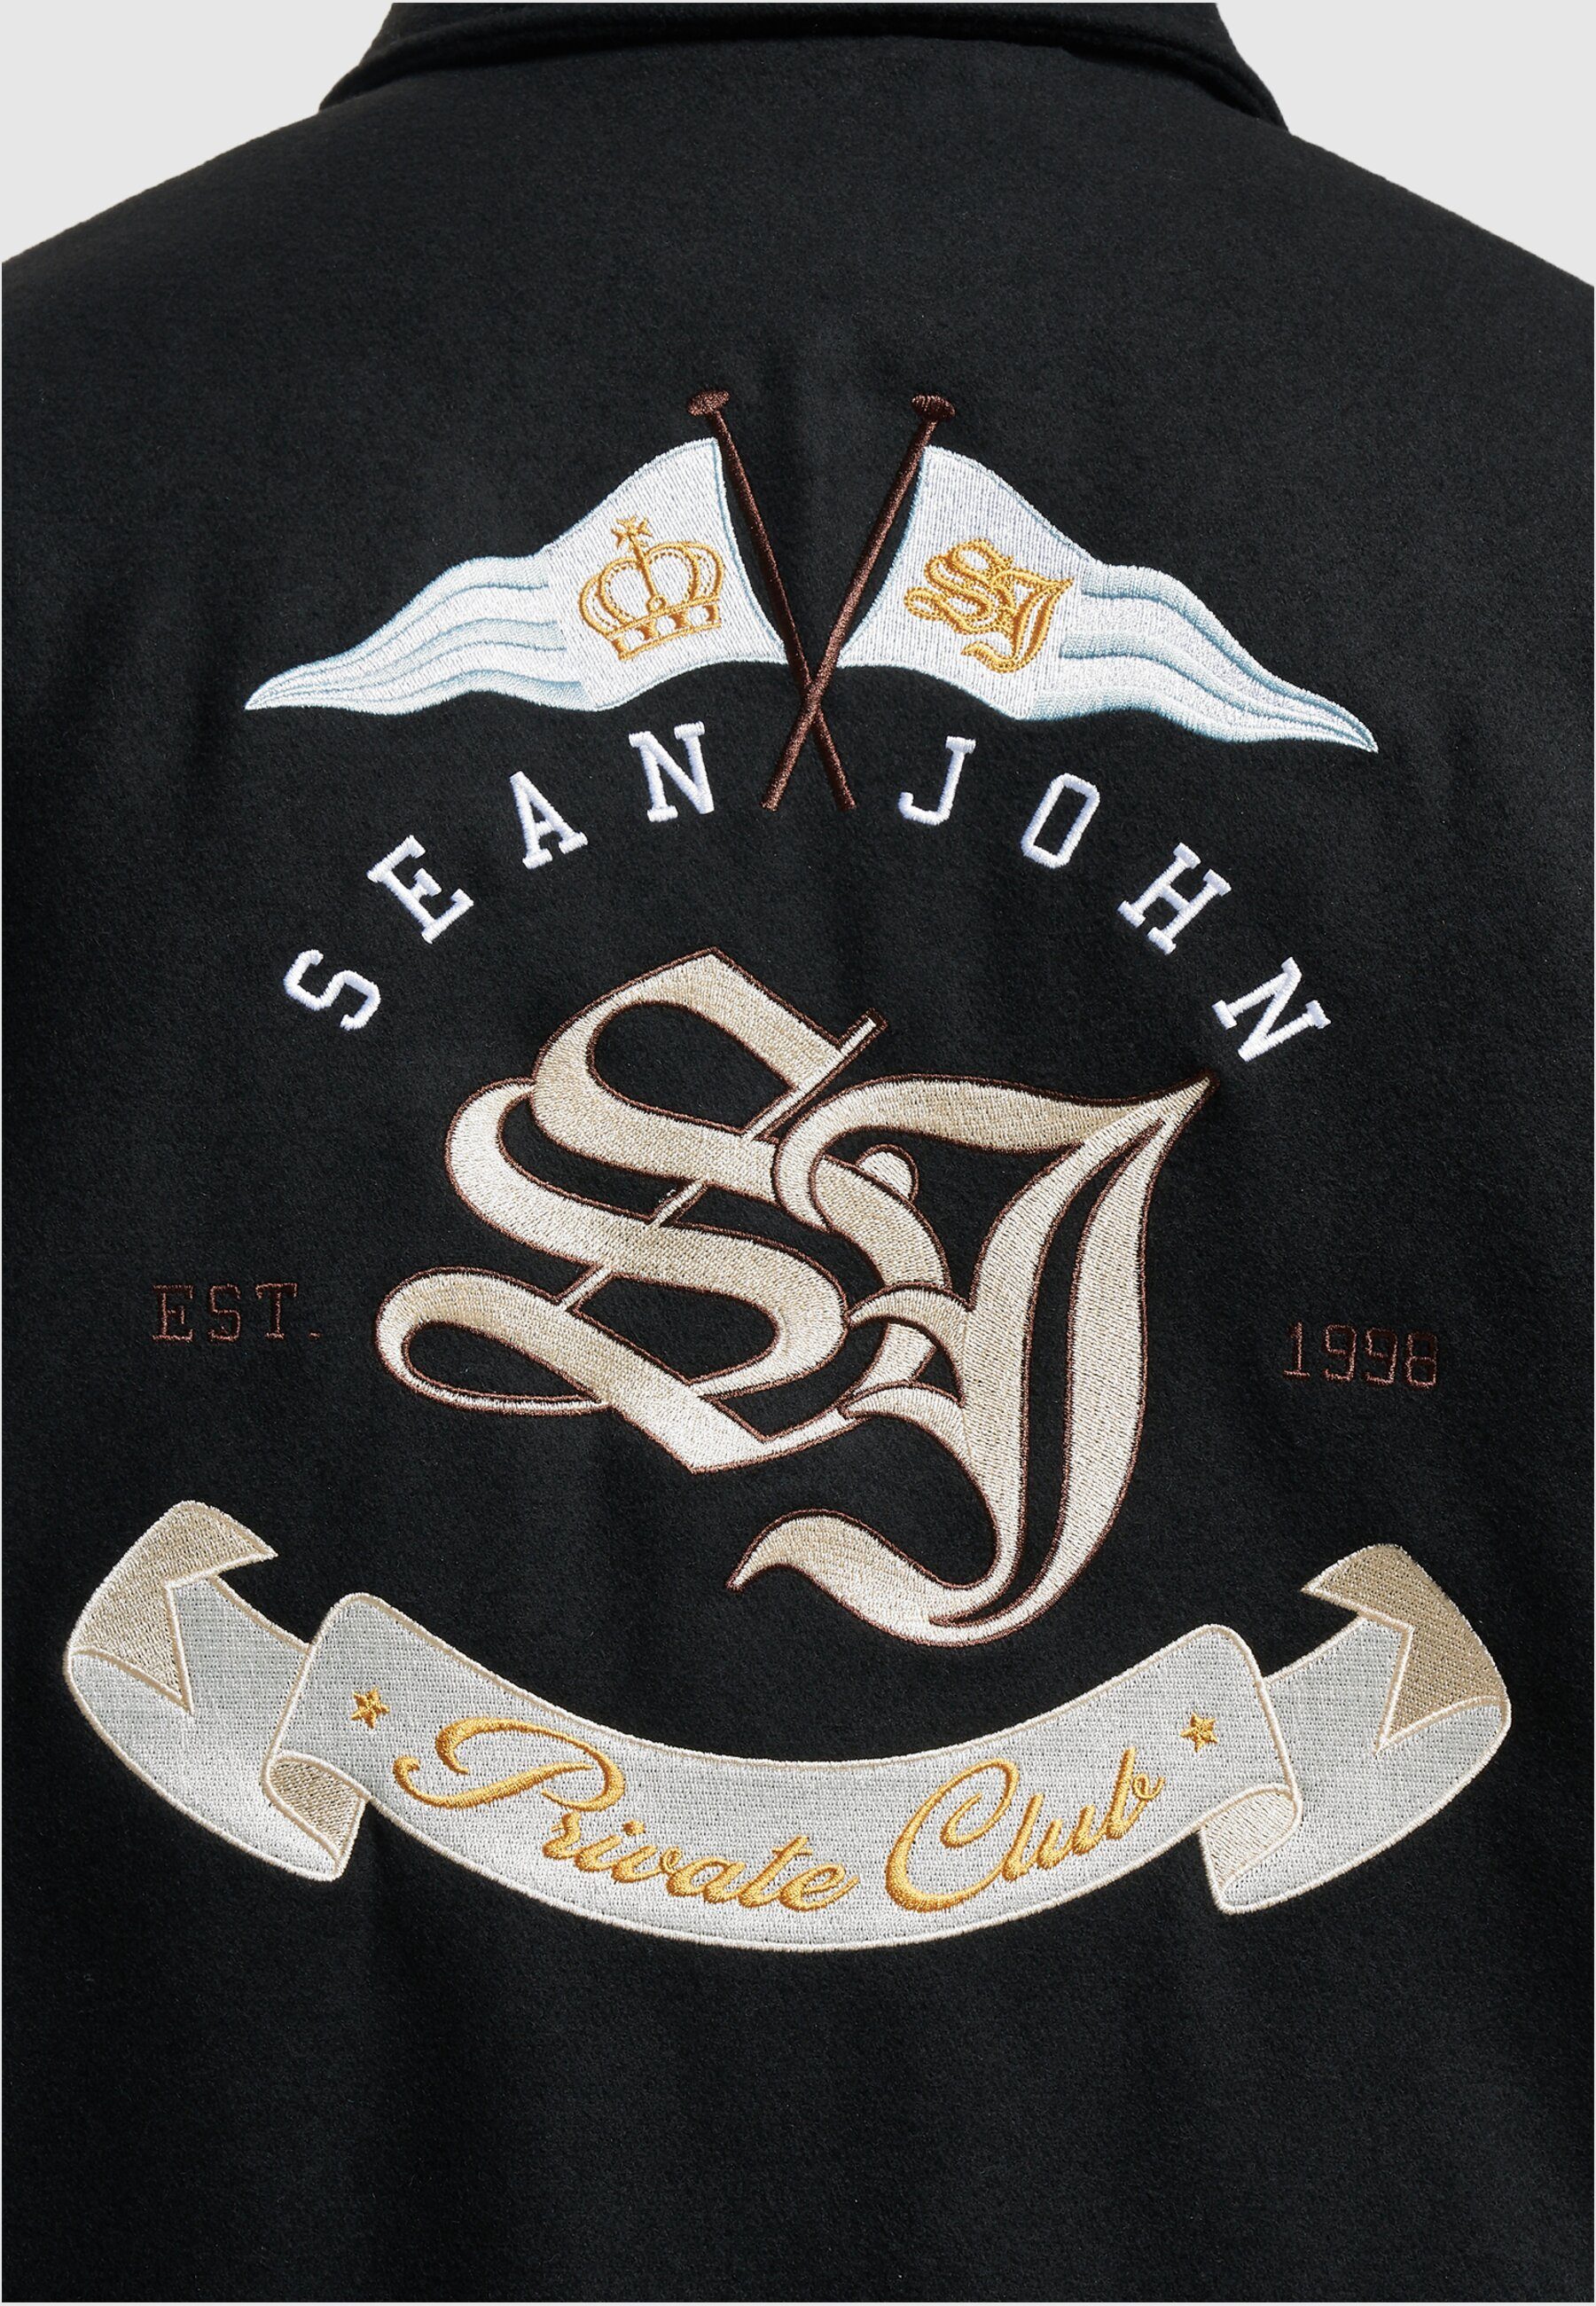 Sean John Outdoorjacke Herren JM232-016-02 Club SJ Yacht Collegejacket (1-St)